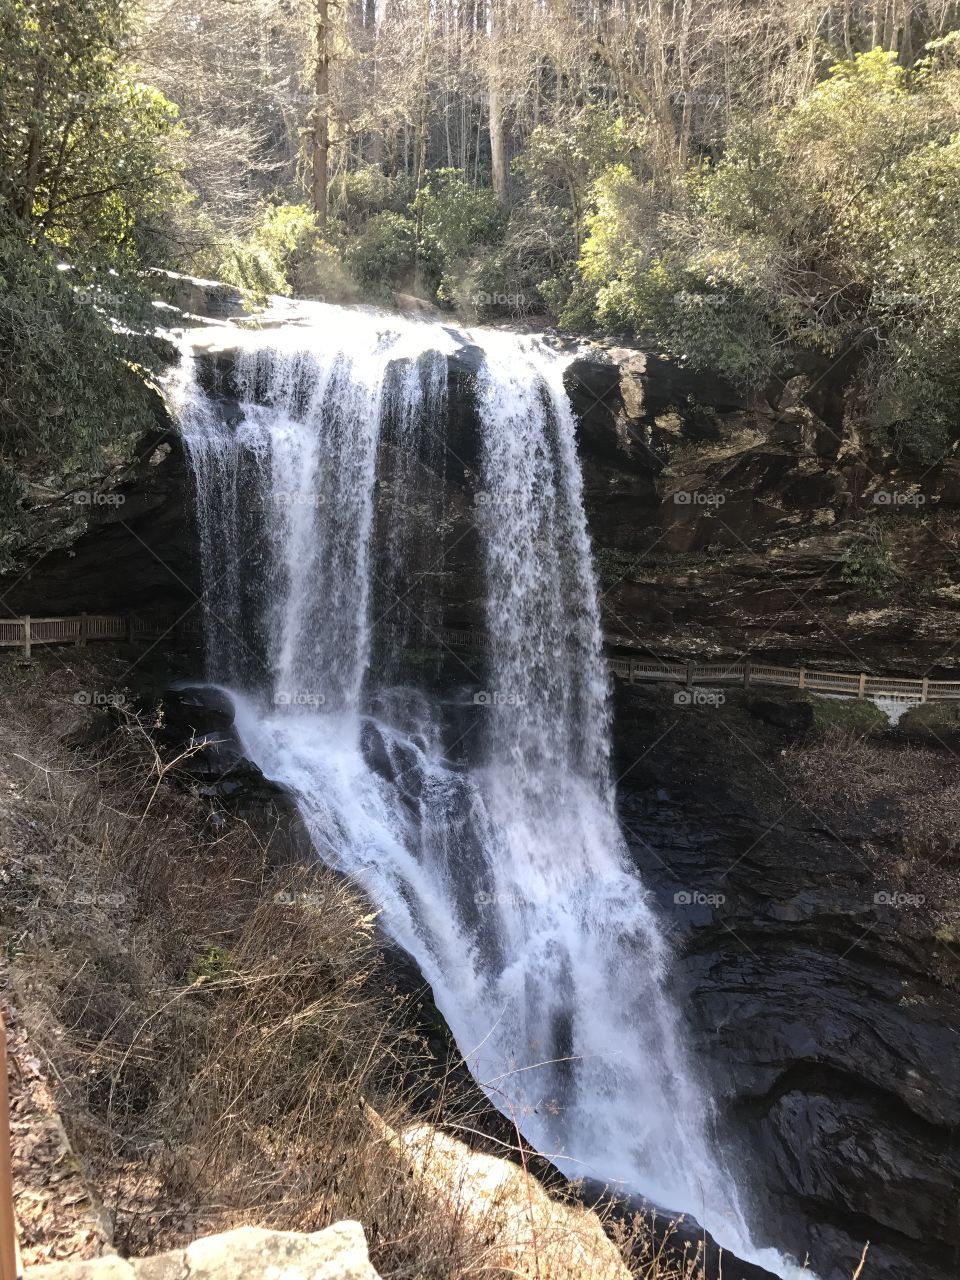 Waterfall north Georgia Mountains 